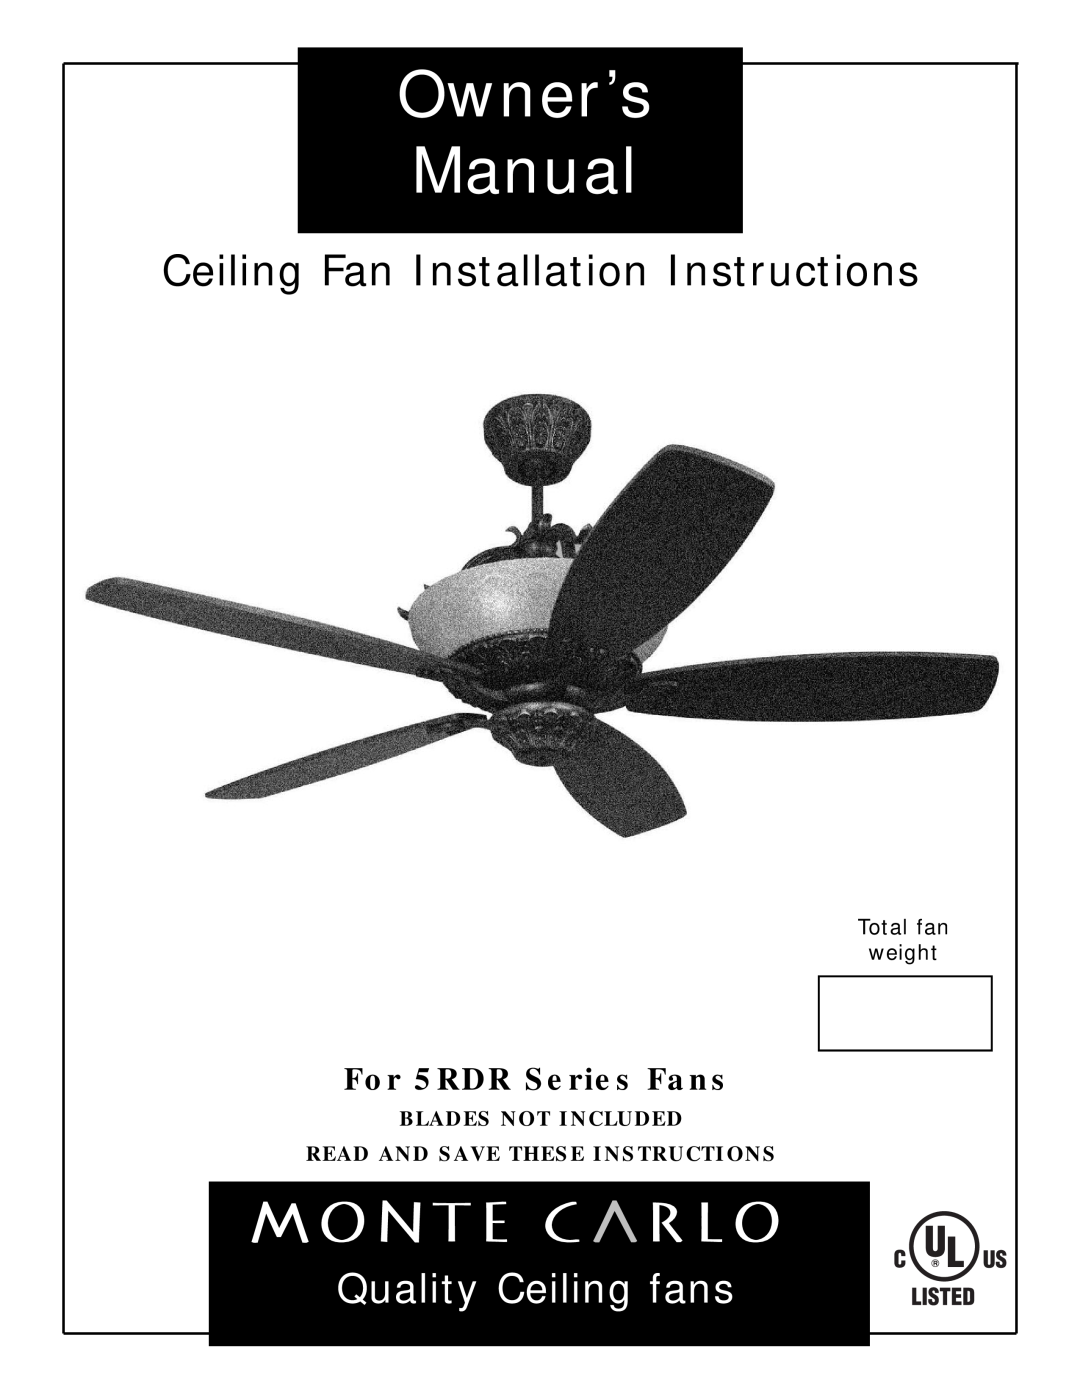 Monte Carlo Fan Company 5RDR owner manual Ceiling Fan Installation Instructions, Quality Ceiling fans, Total fan weight 